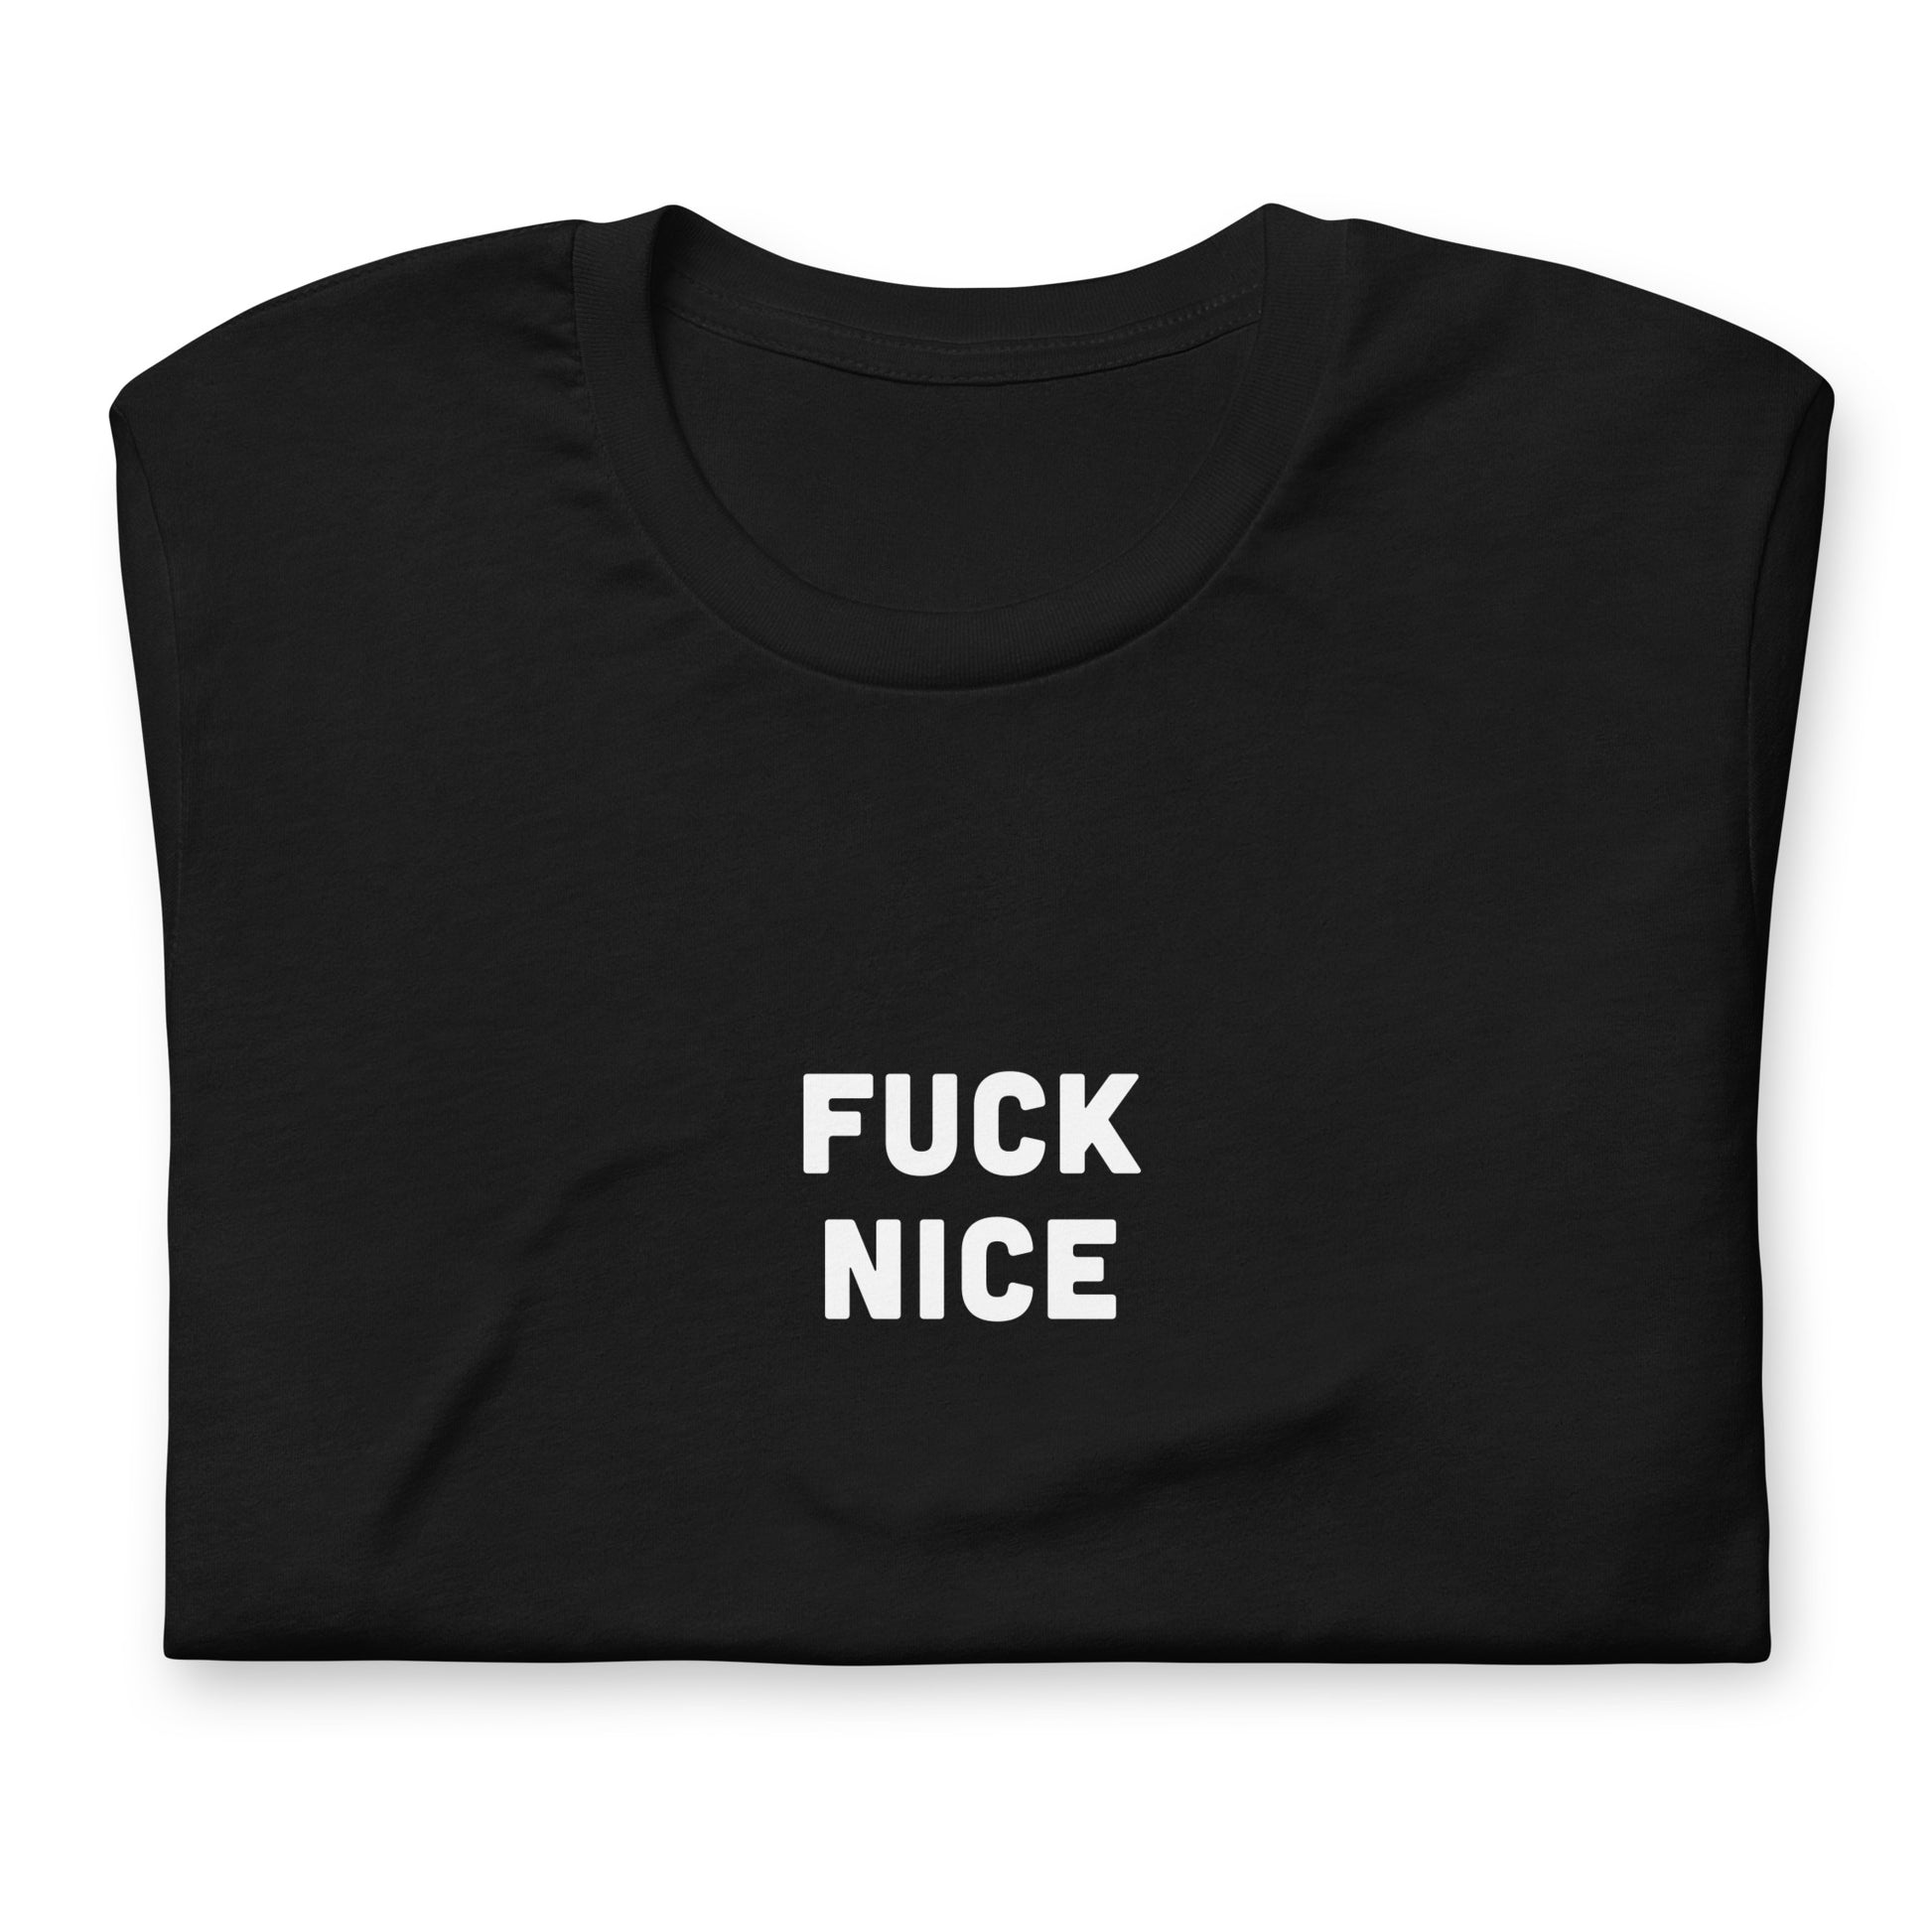 Fuck Nice T-Shirt Size M Color Black